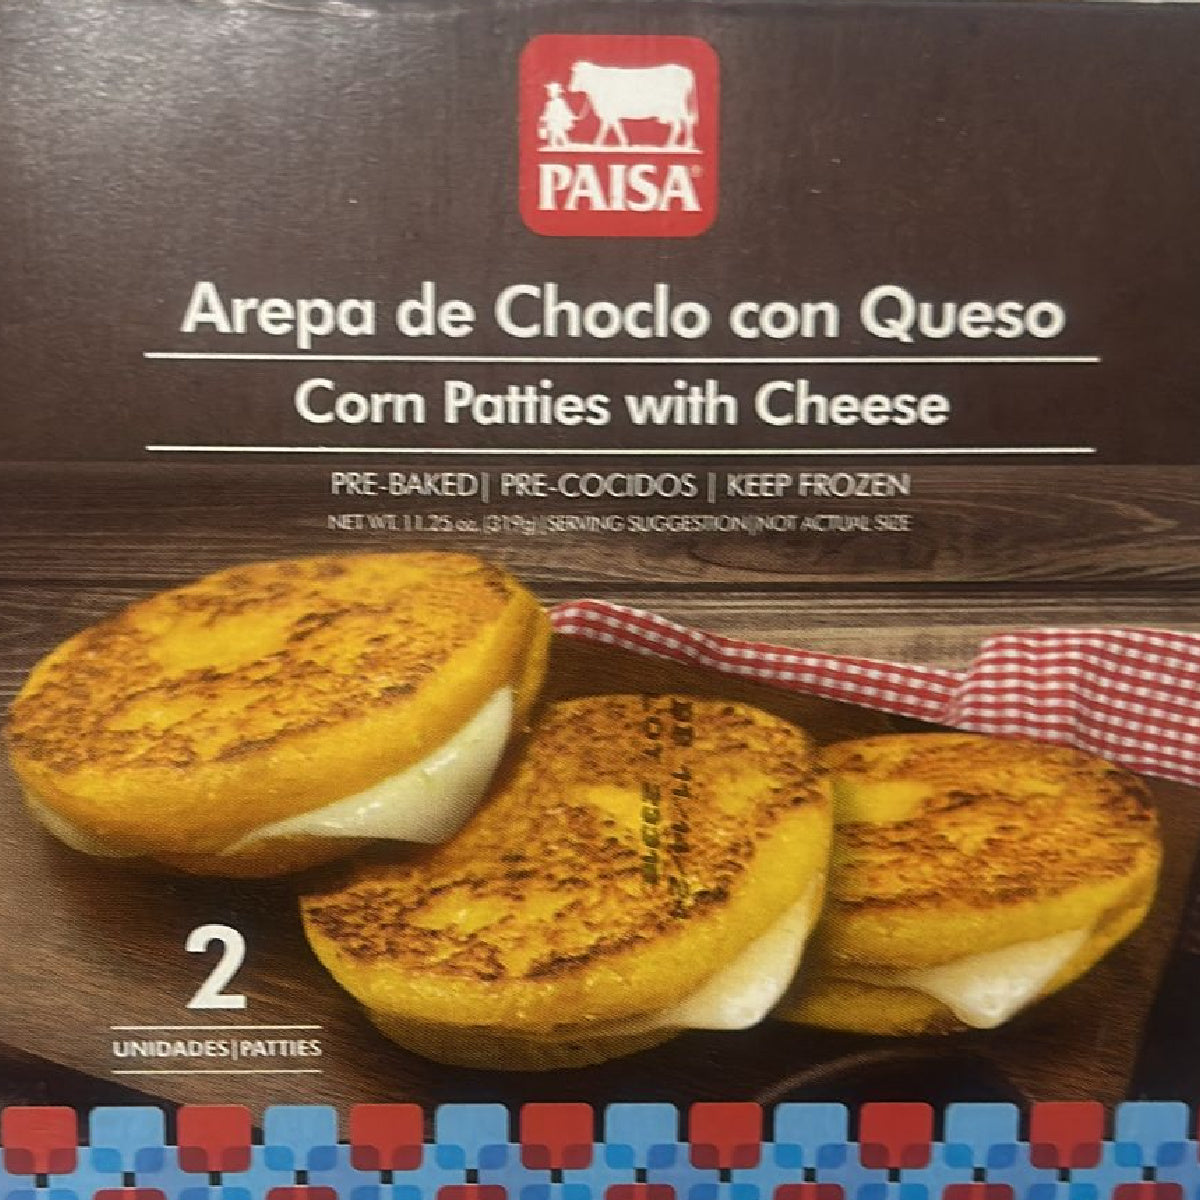 Arepa de Chclo con queso - Sweet corn cornmeal cake filled with cheese